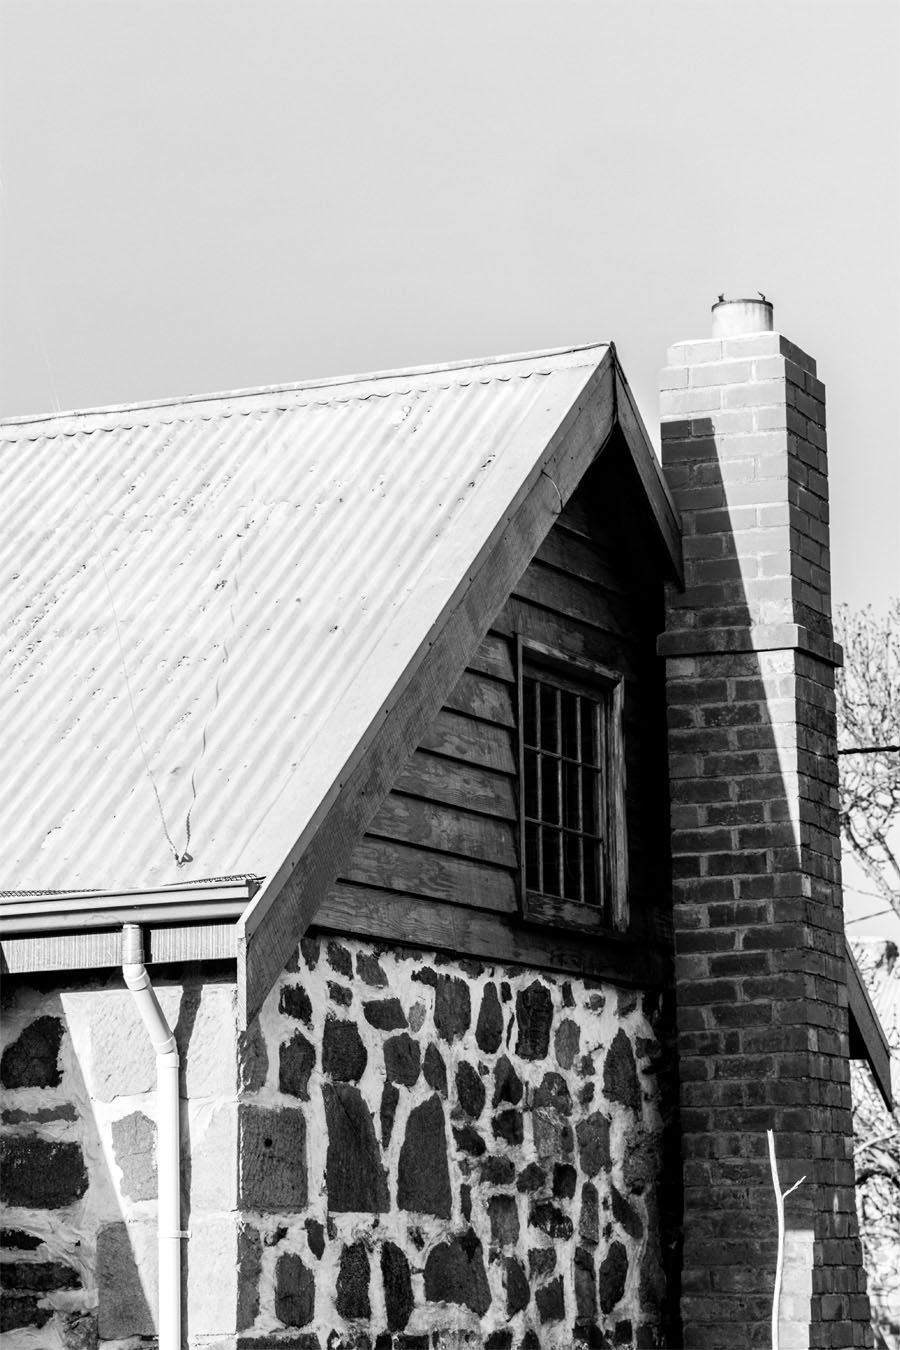 Blacksmith's Cottage